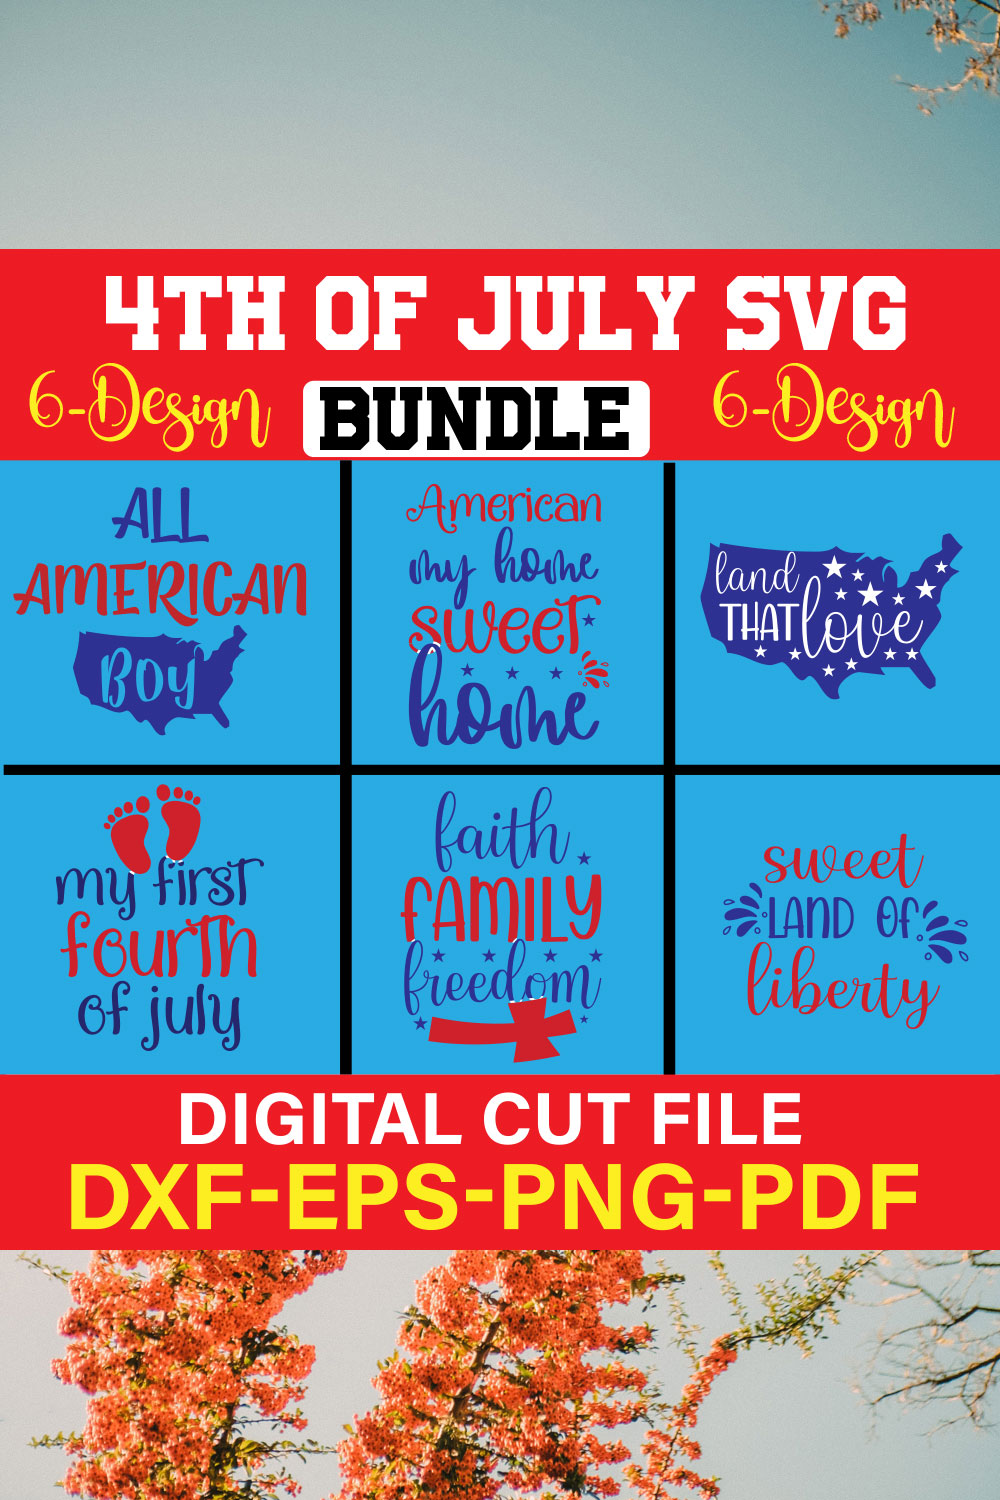 4th of July SVG Bundle Vol-2 pinterest preview image.